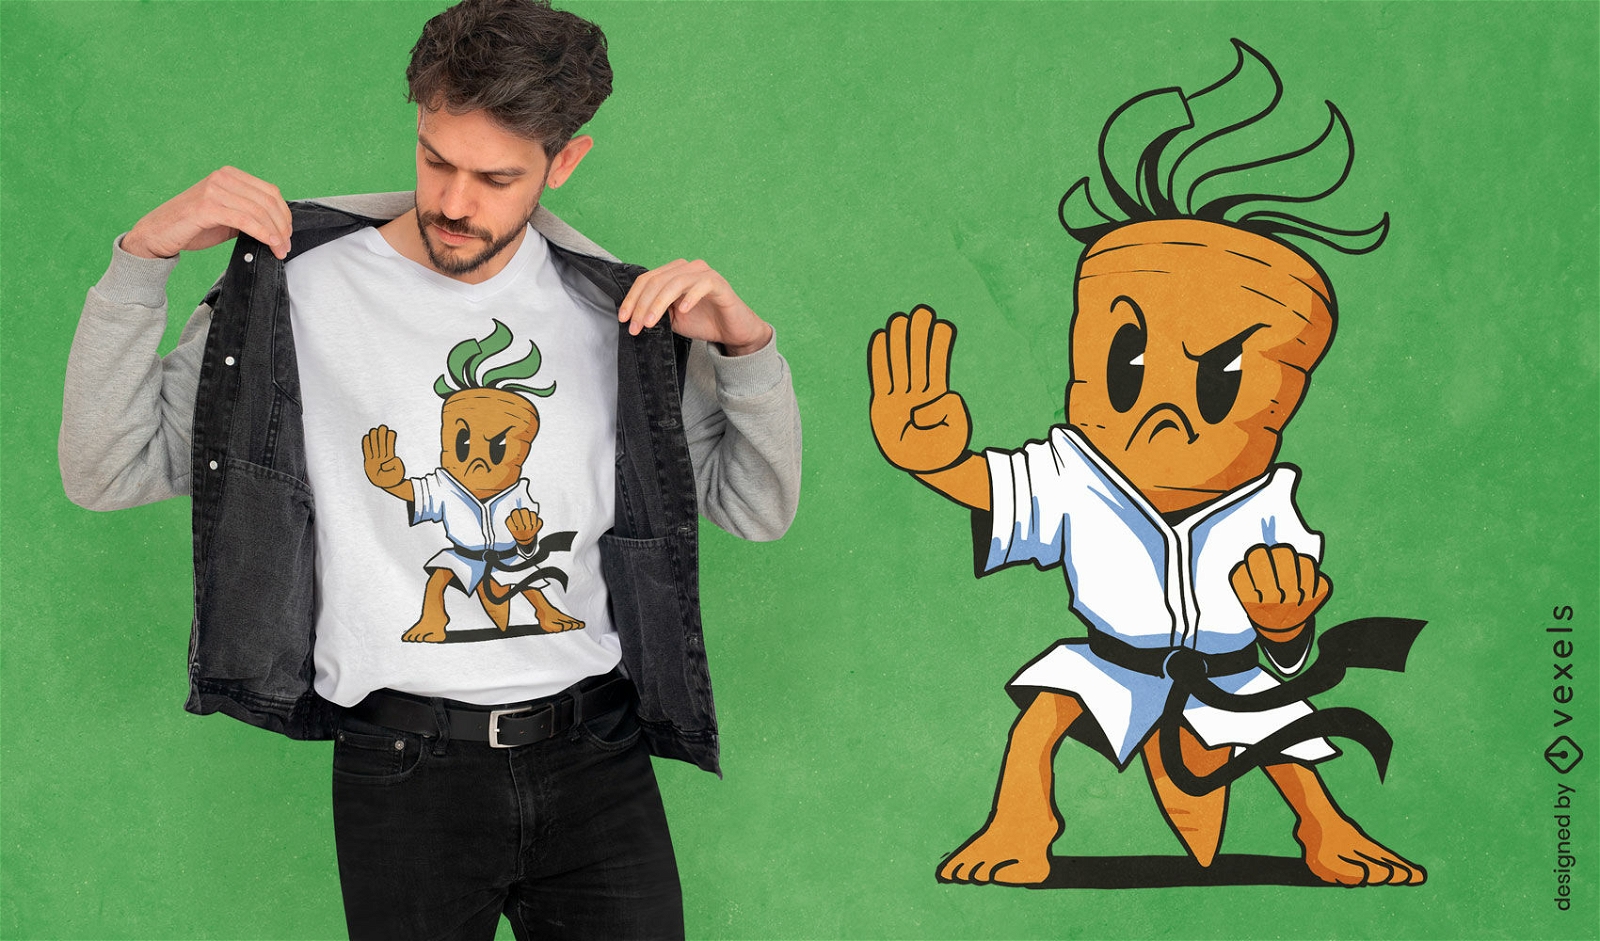 Komisches Karate-Karotten-T-Shirt-Design